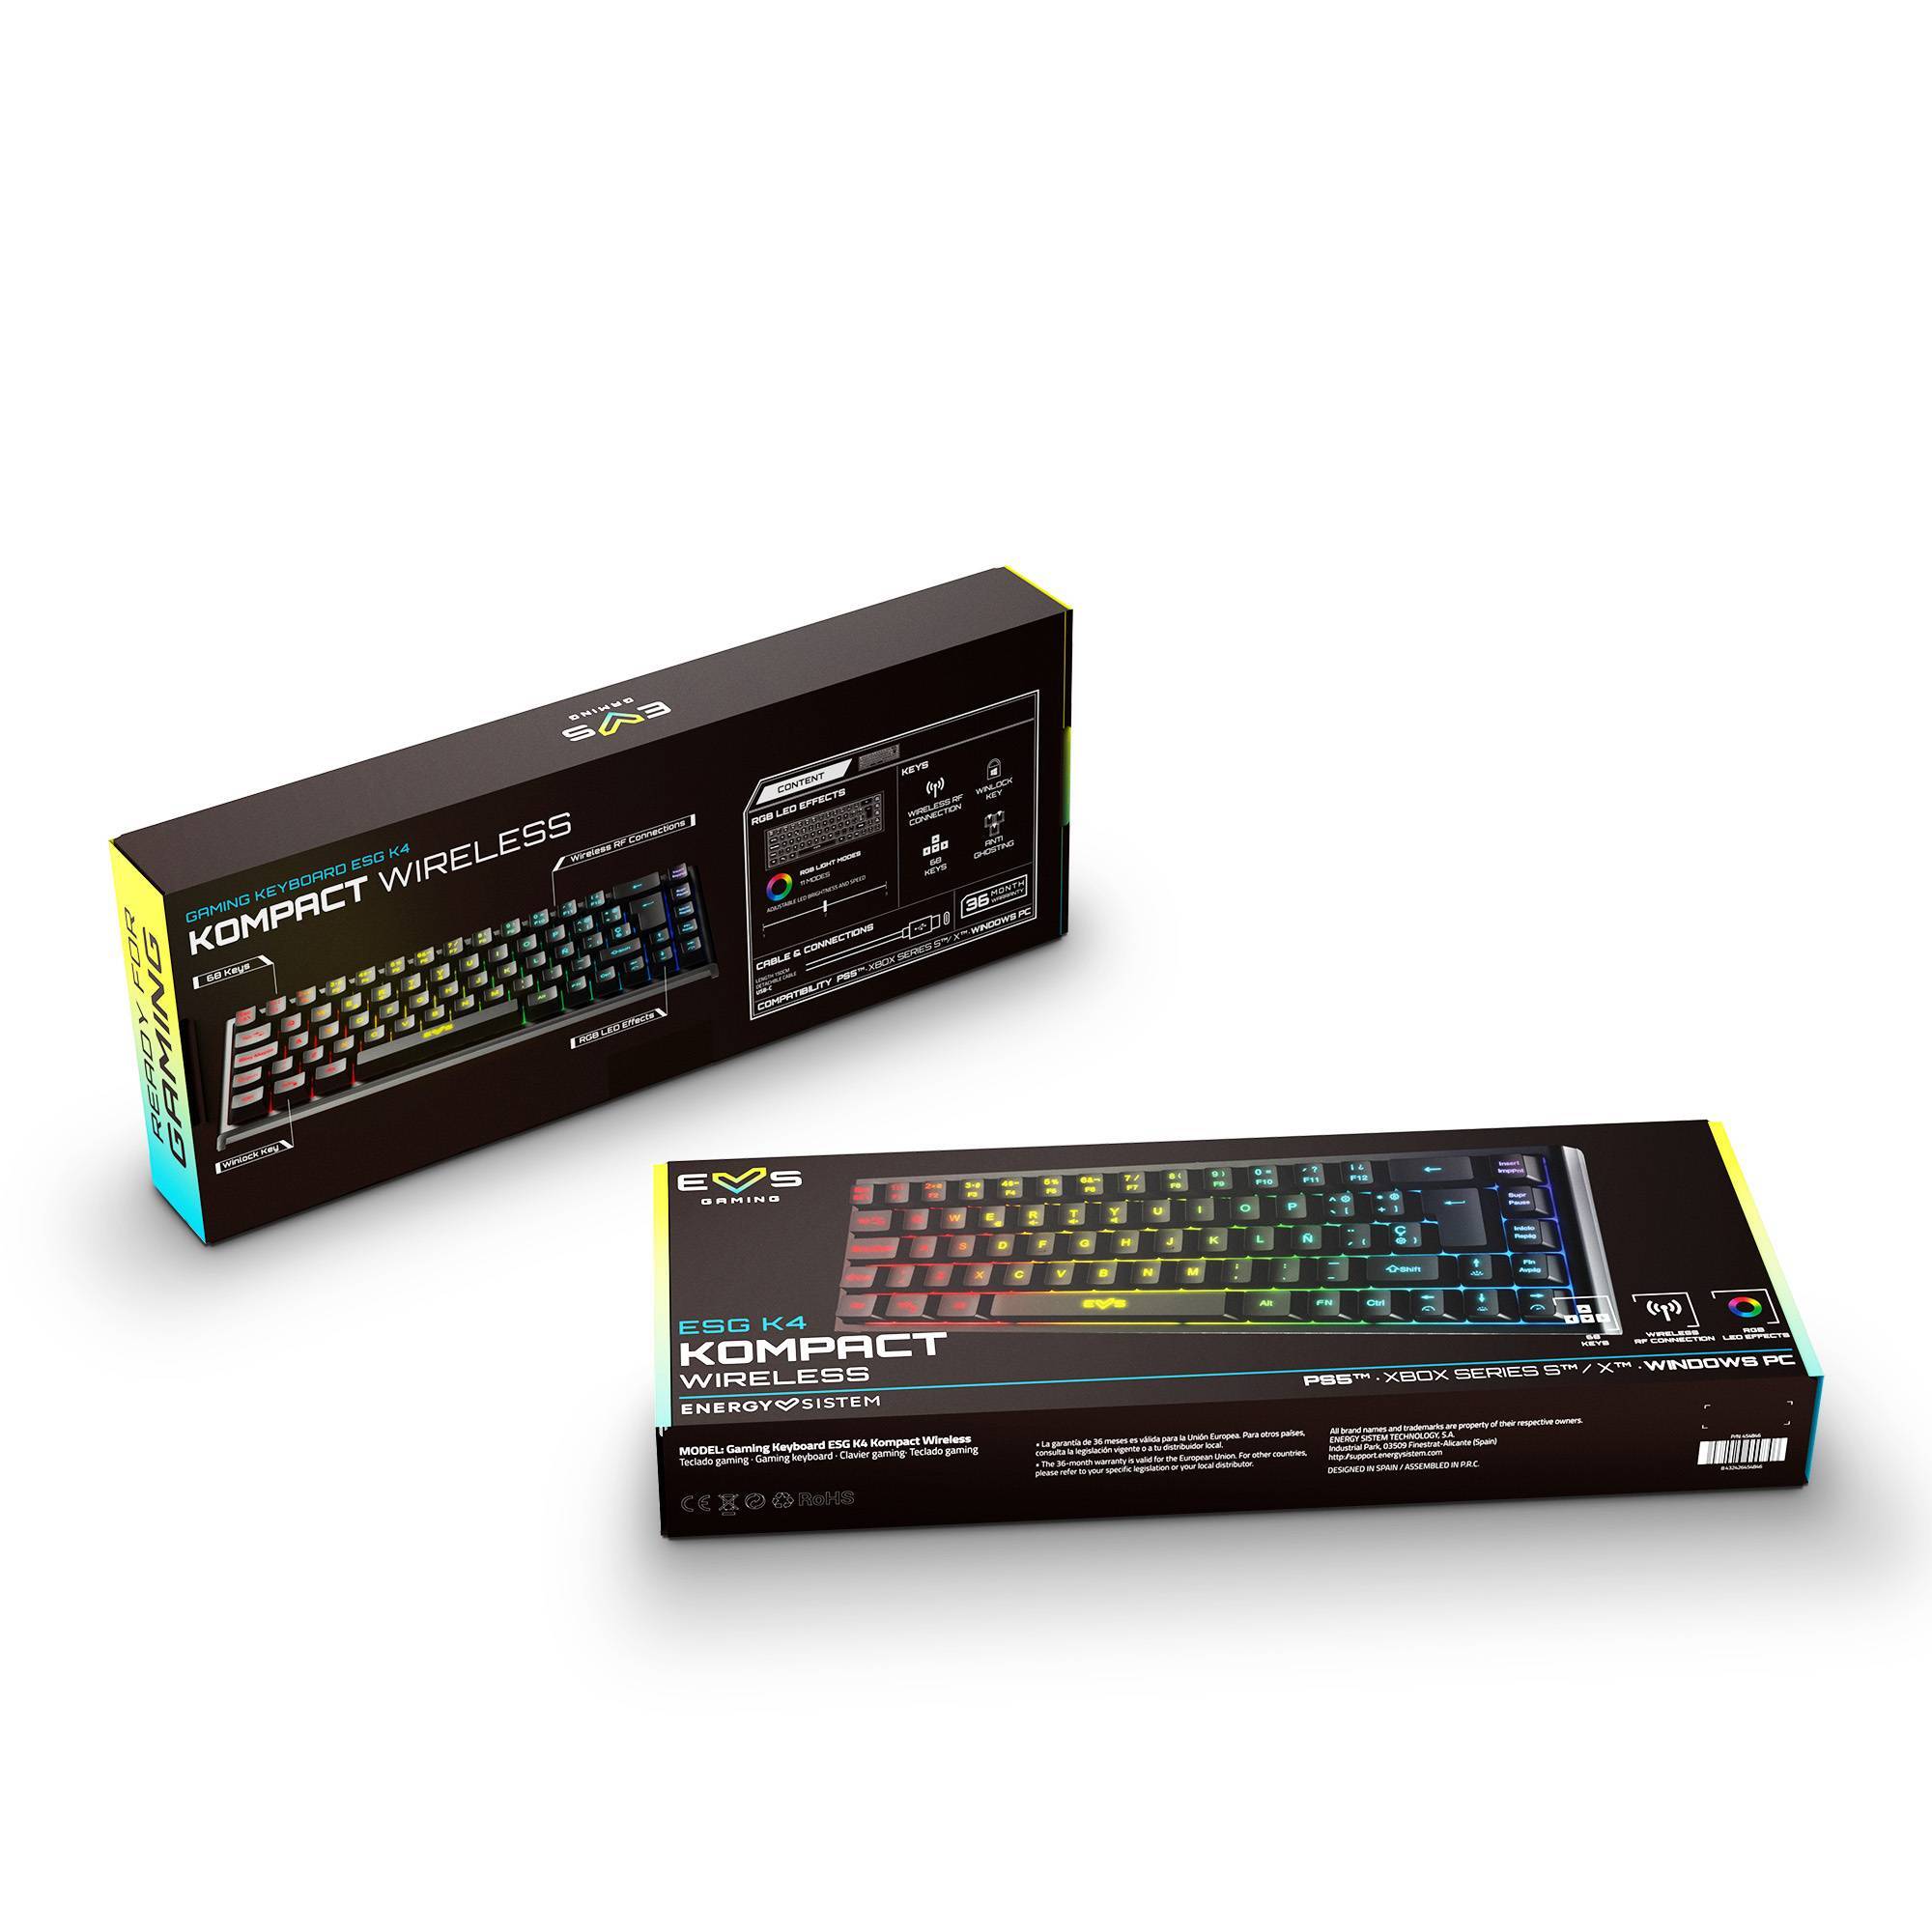 Verpackung der ESG K4 KOMPACT-WIRELESS Gaming-Tastatur